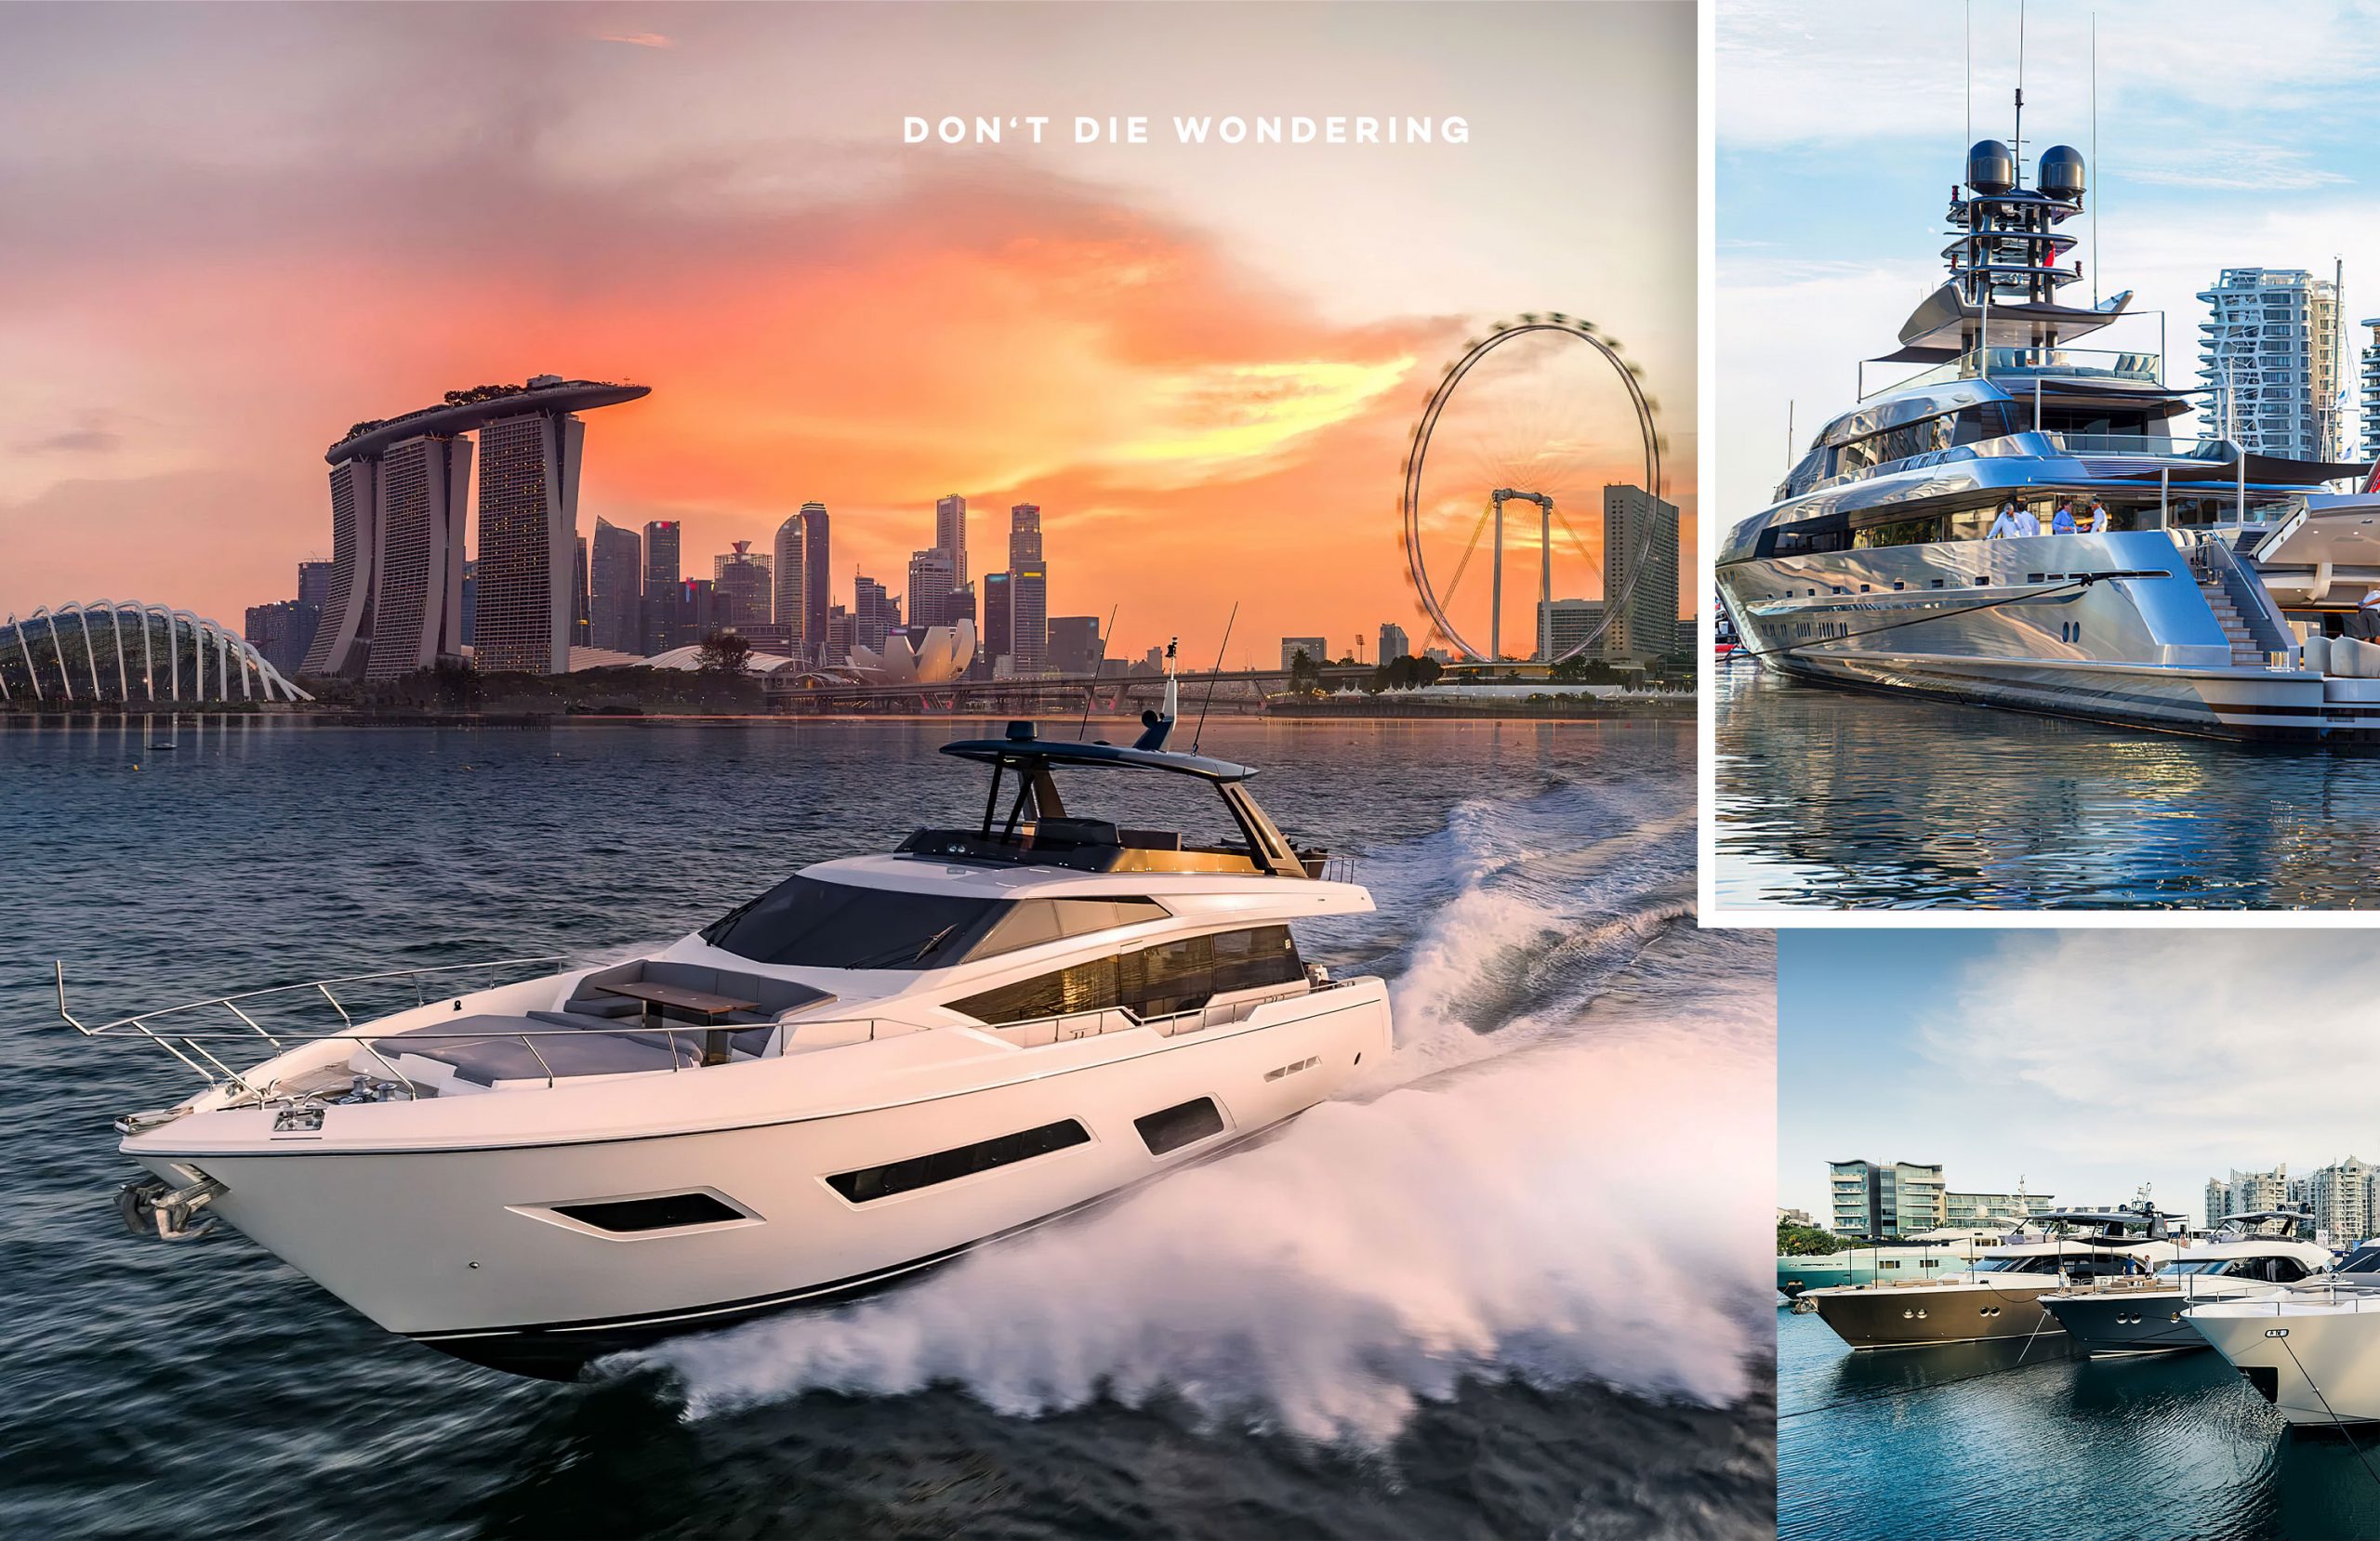 The Singapore Yacht Show 2022 DDW